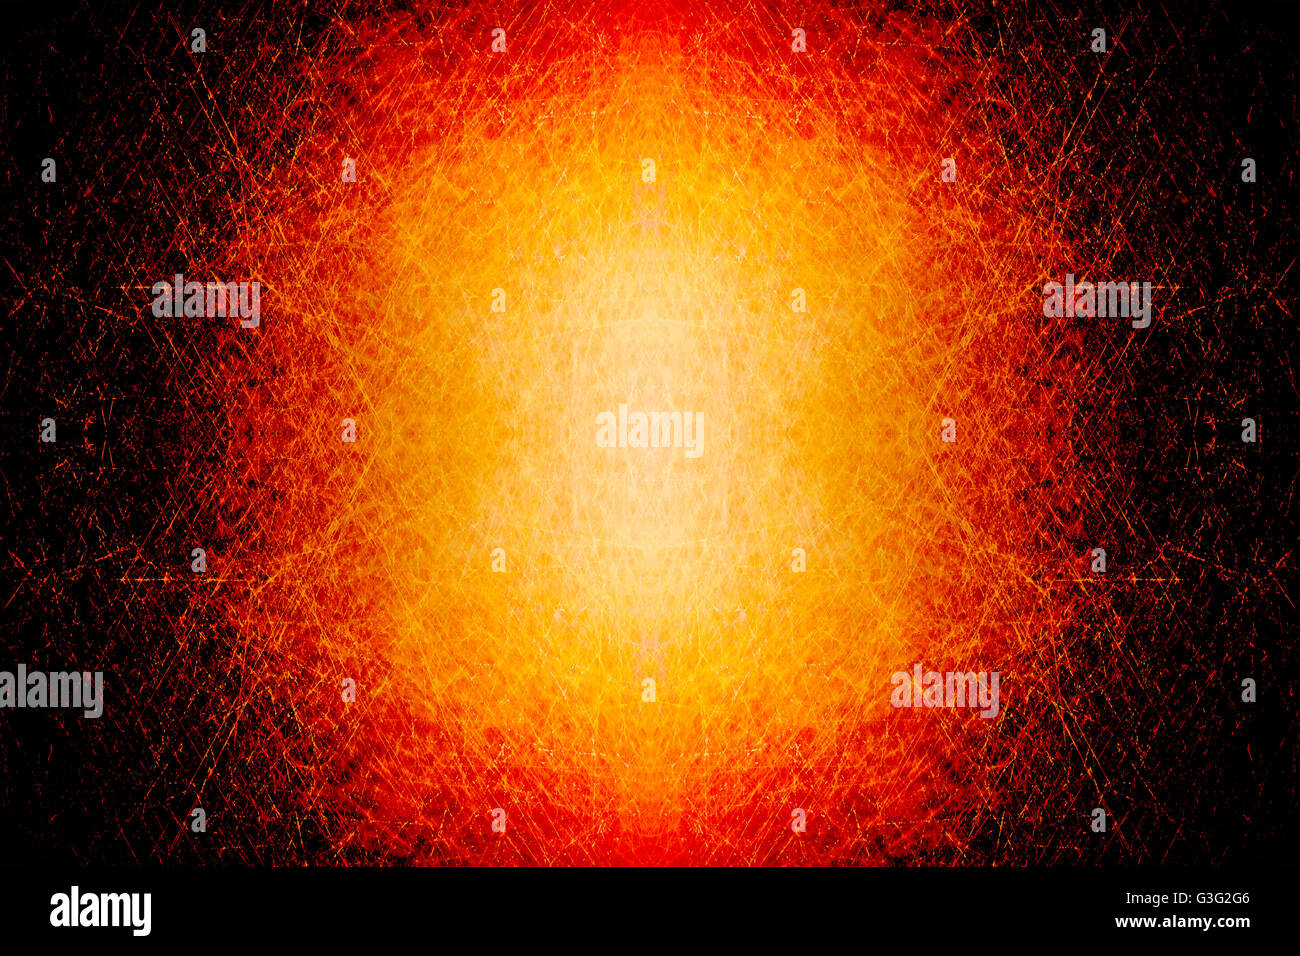 Grunge scratched glowing fireball background Stock Photo